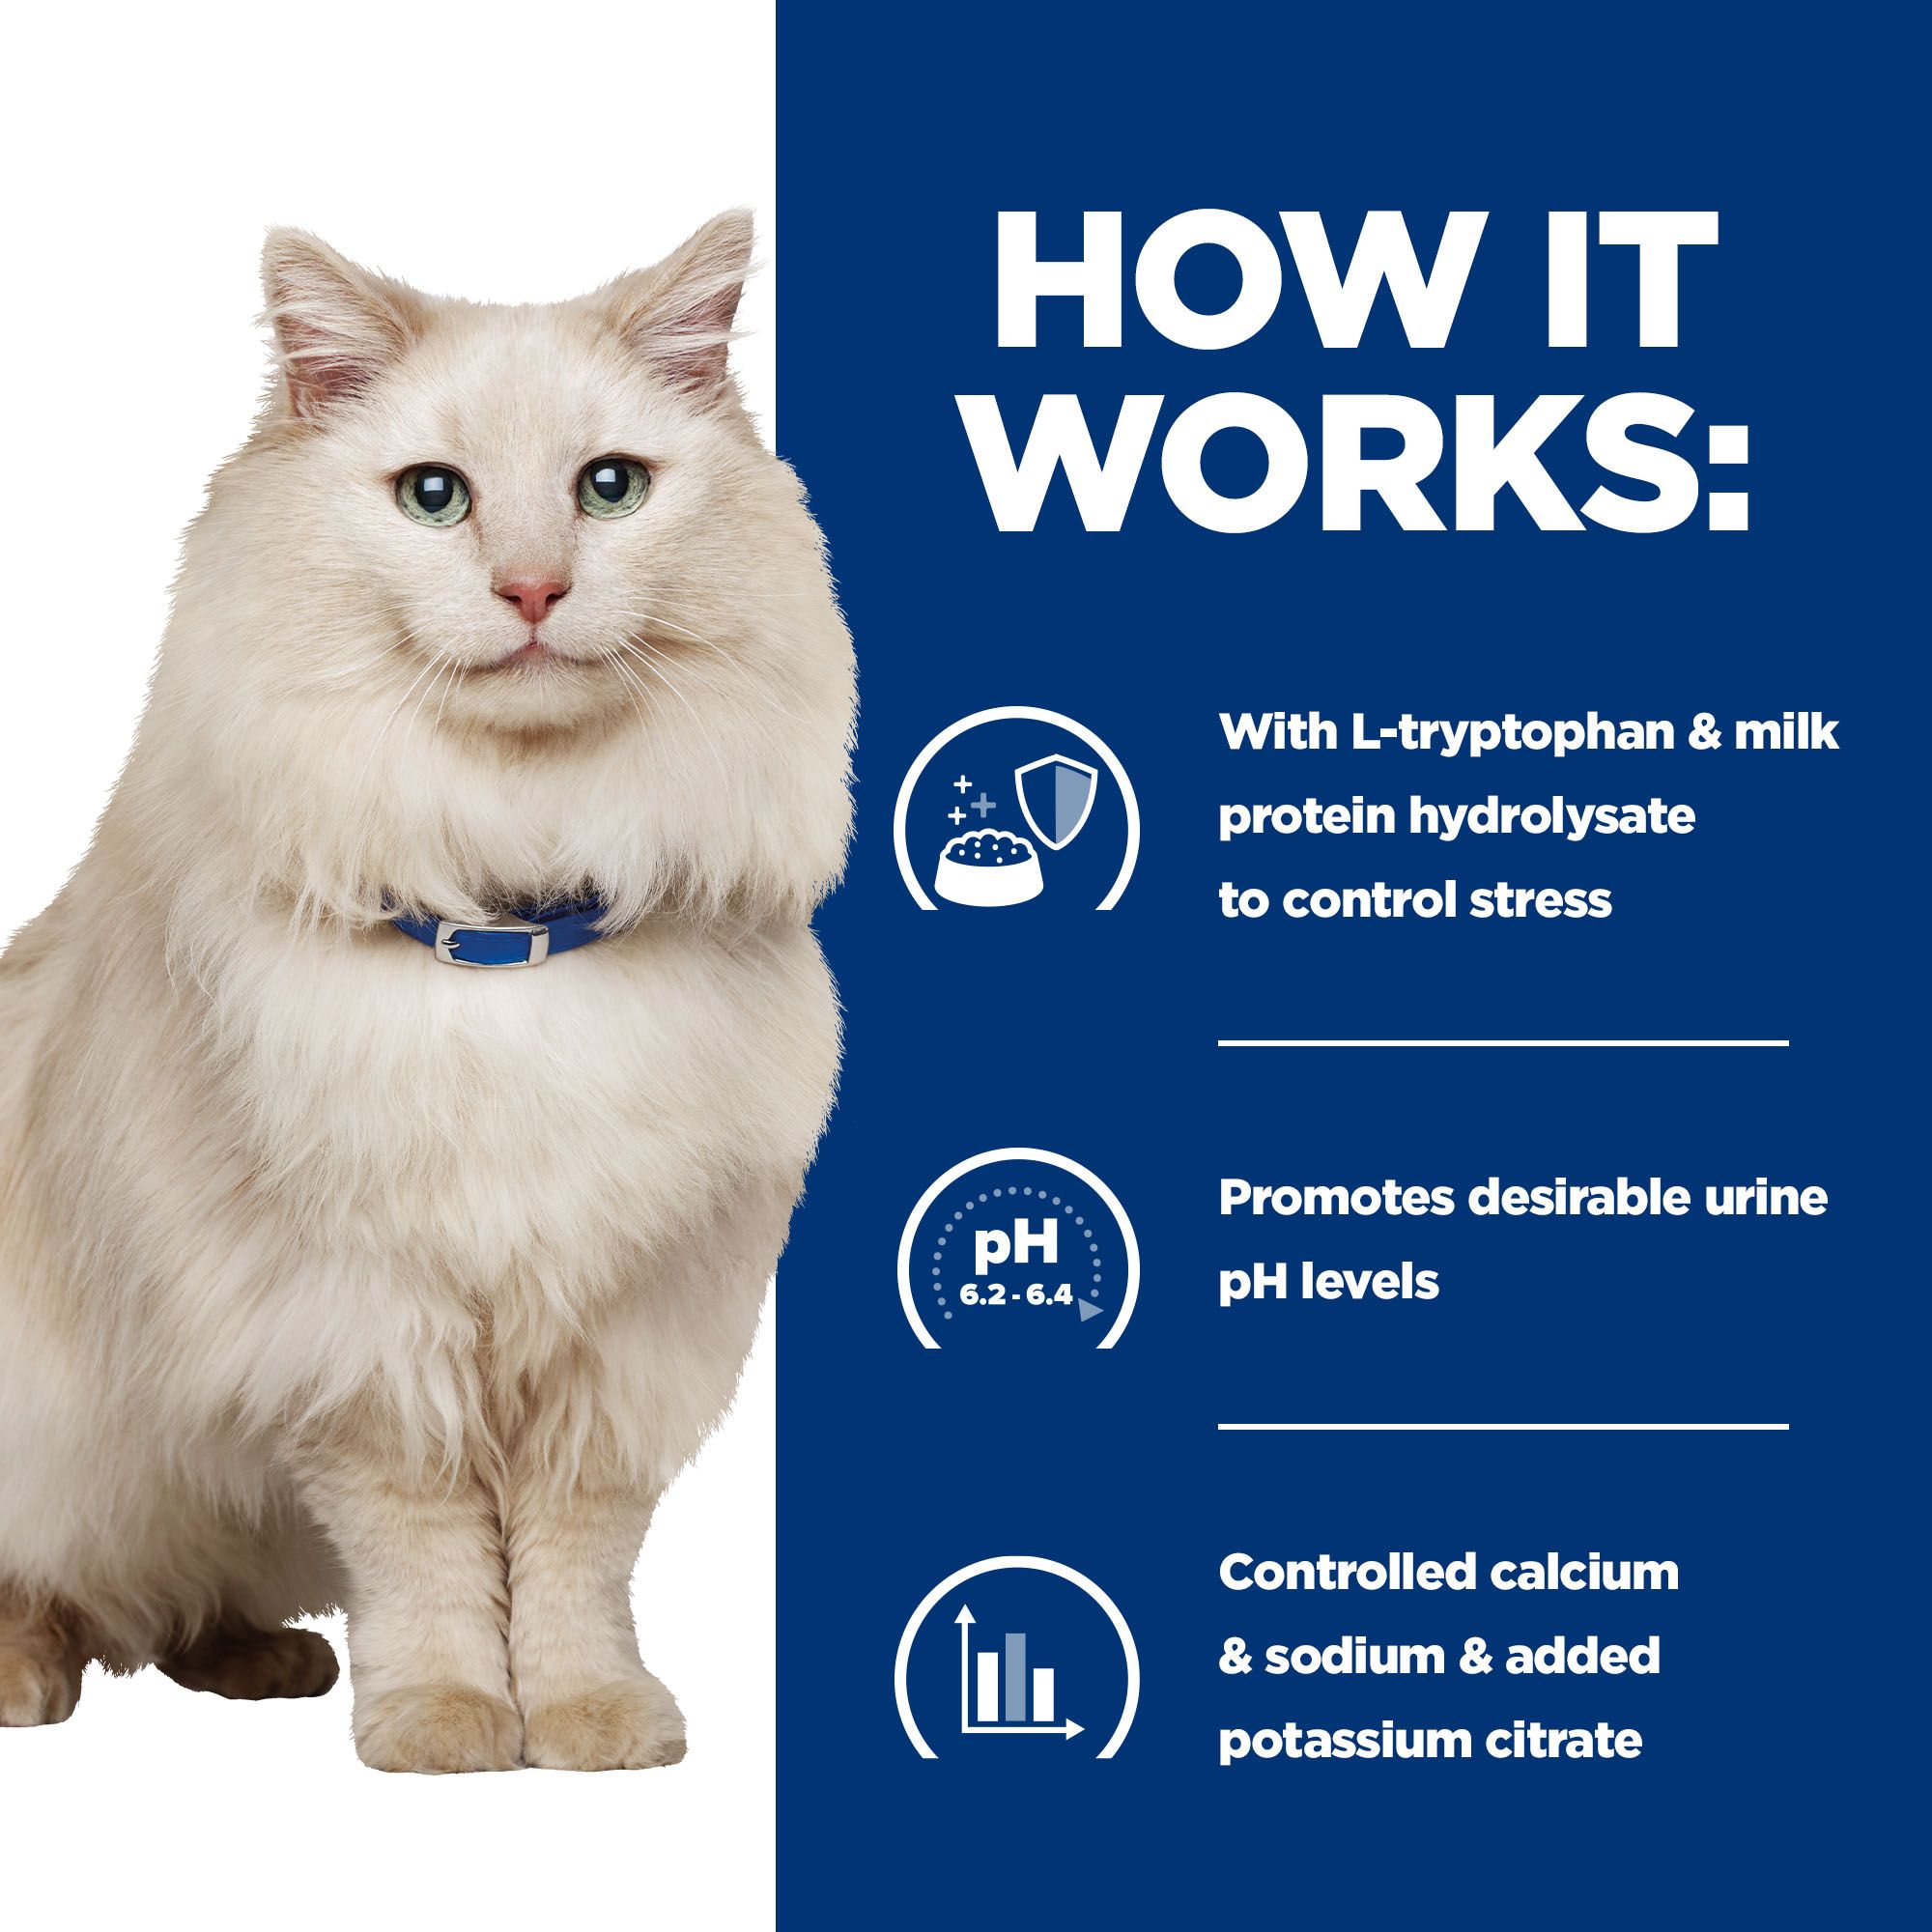 Hill's Prescription Diet c/d Multicare Stress Urinary Care Kattenvoer met Kip Zak 3kg